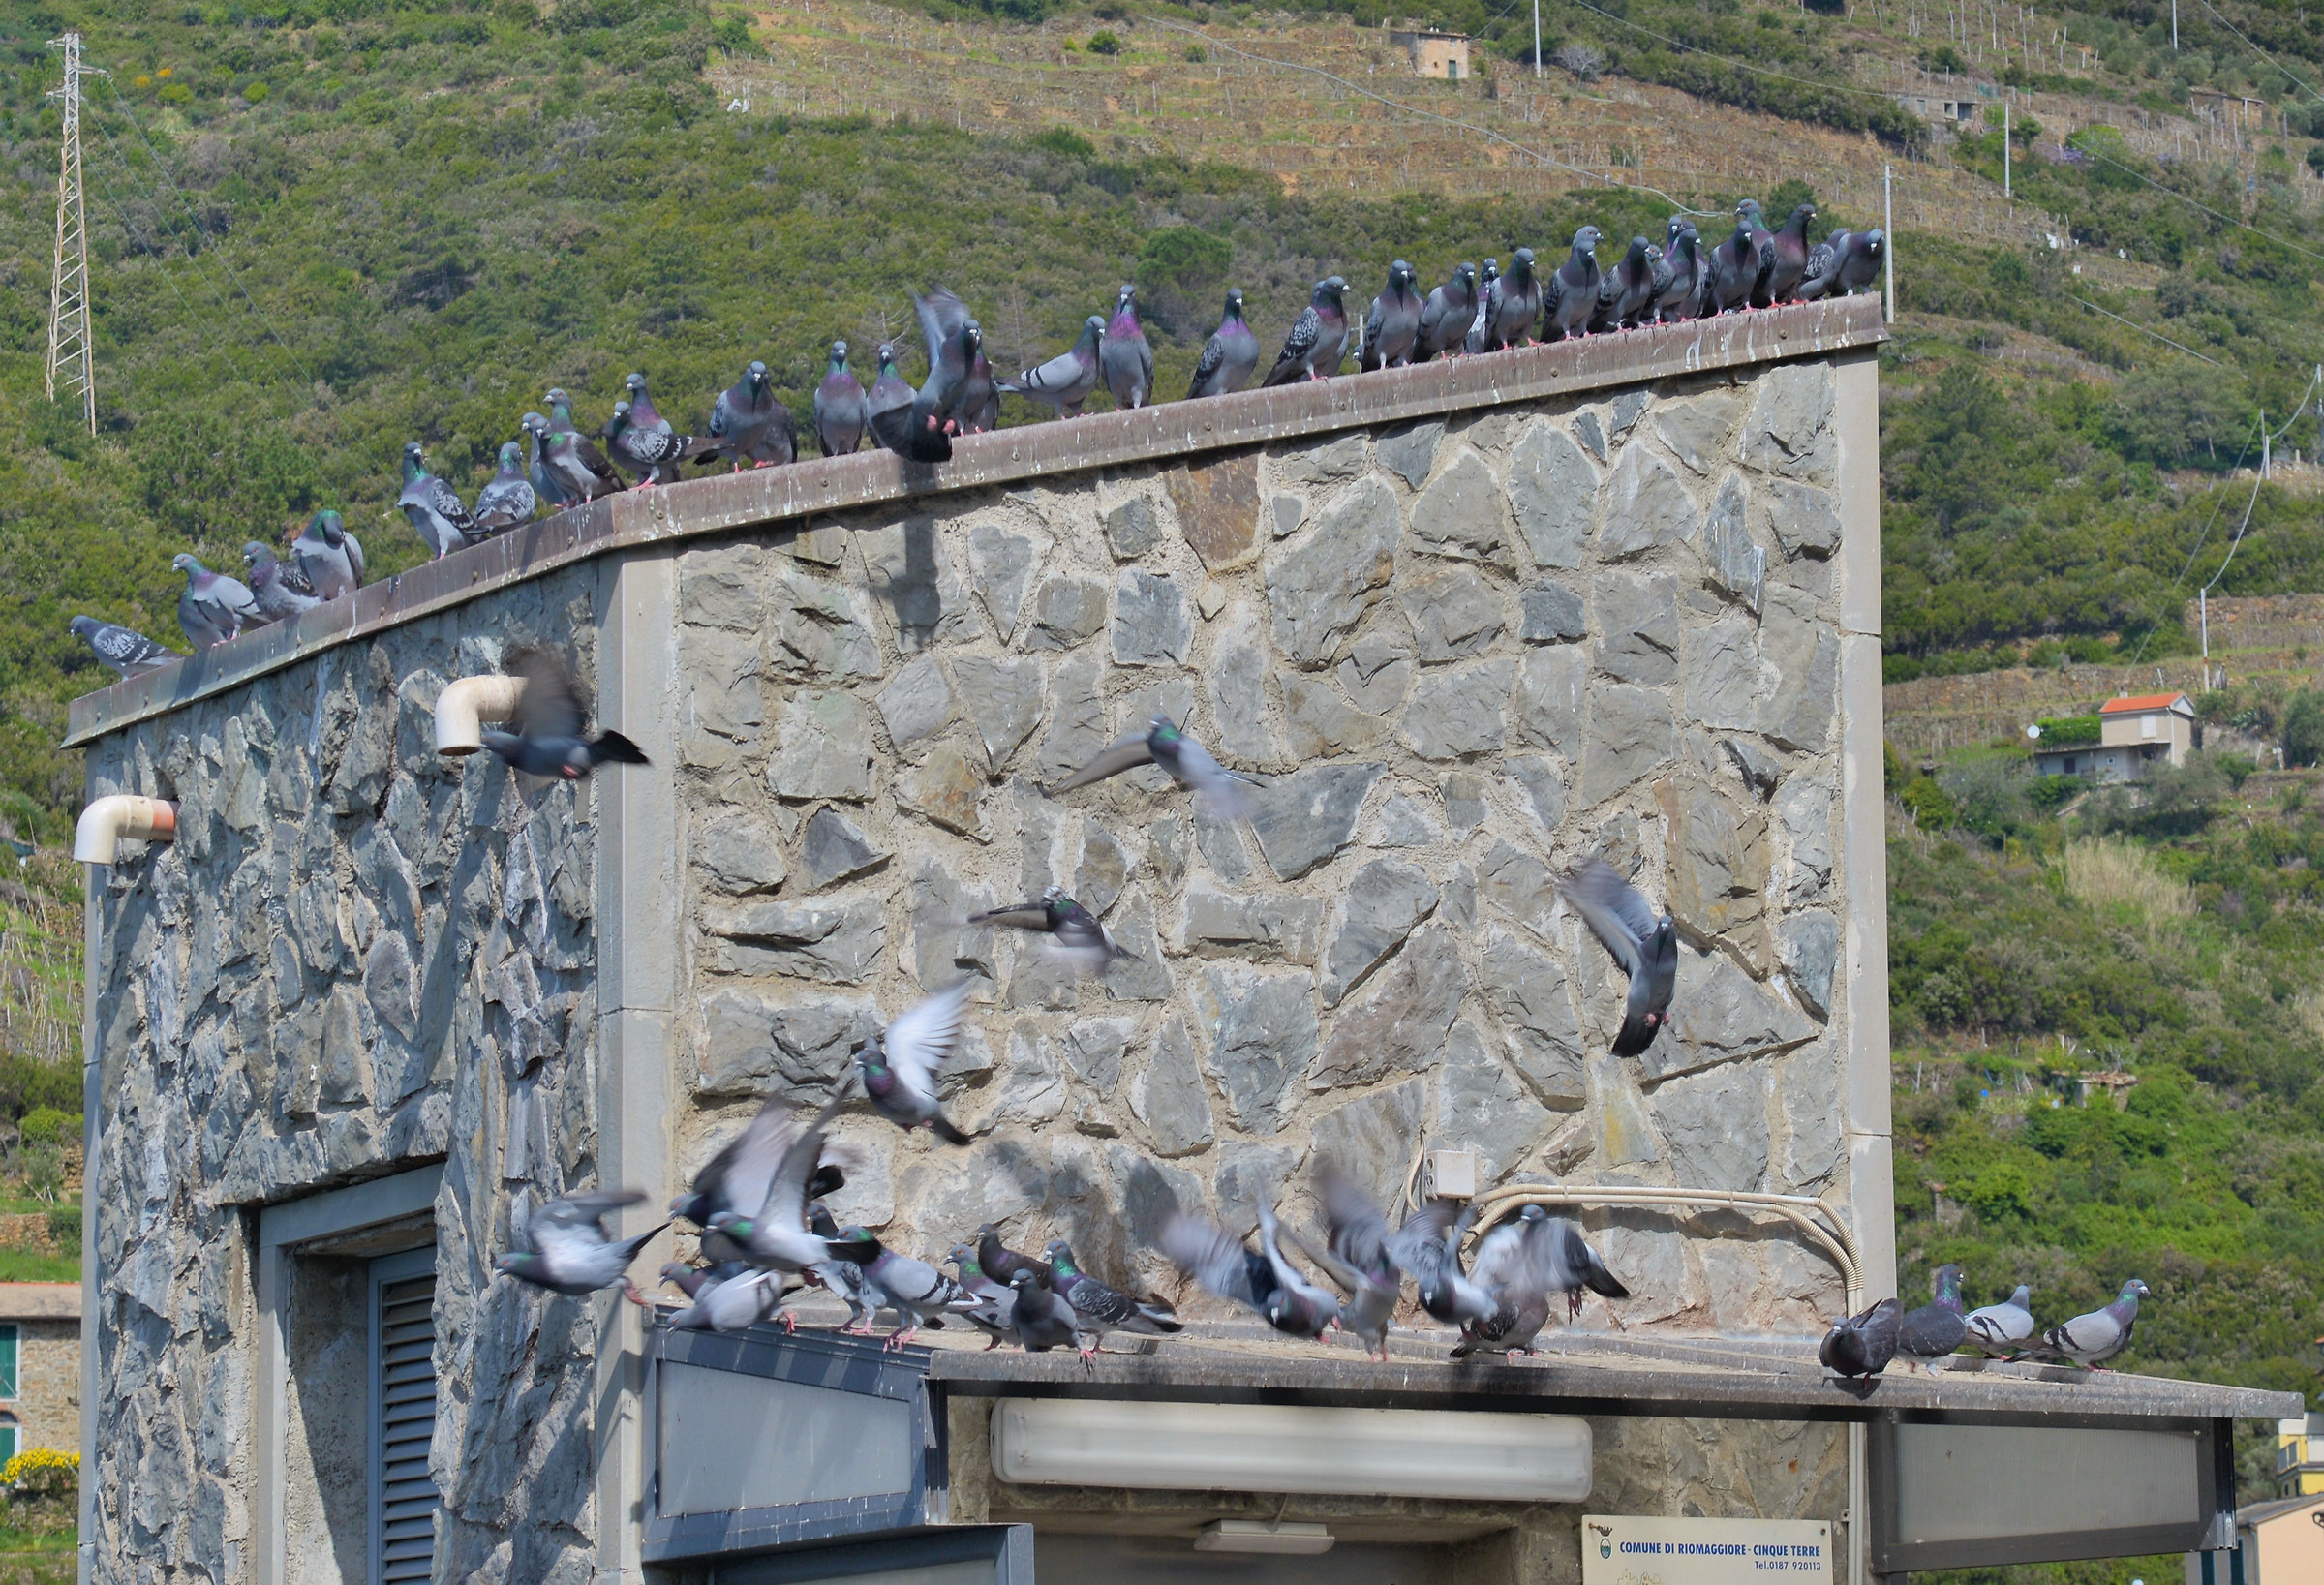 the pigeons condo...